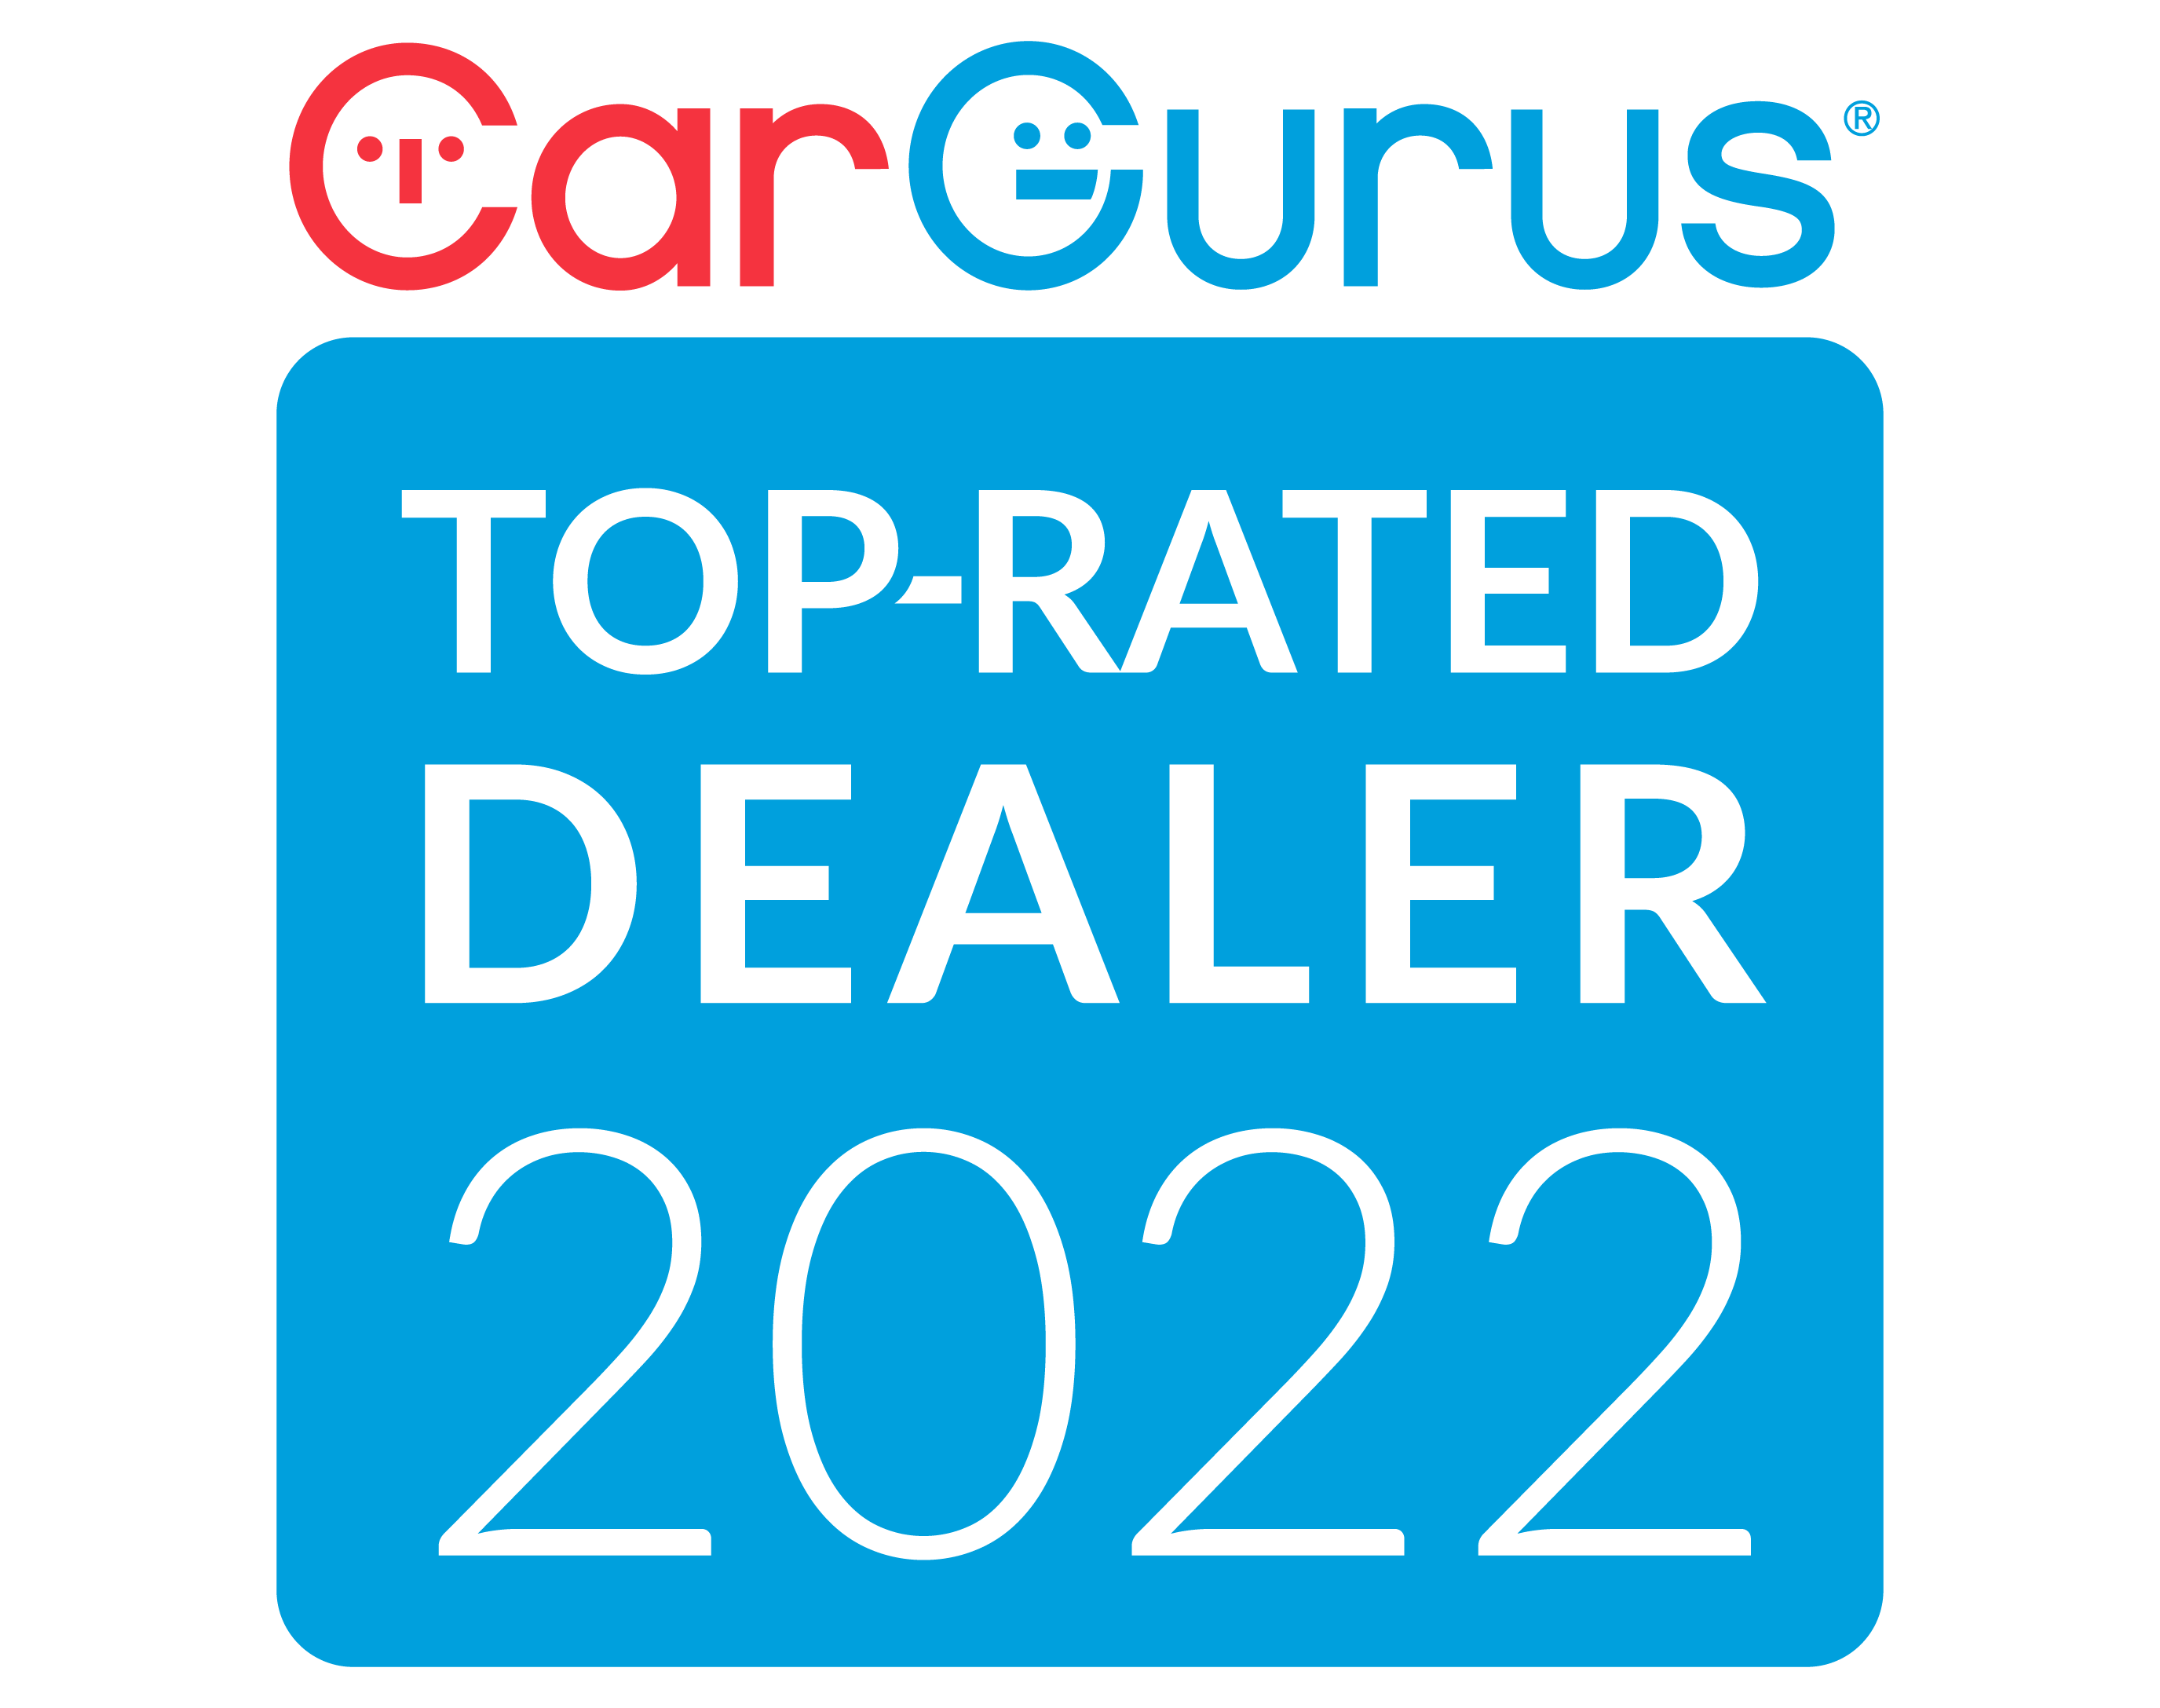 CarGurus Top-Rated Dealer 2022 badge